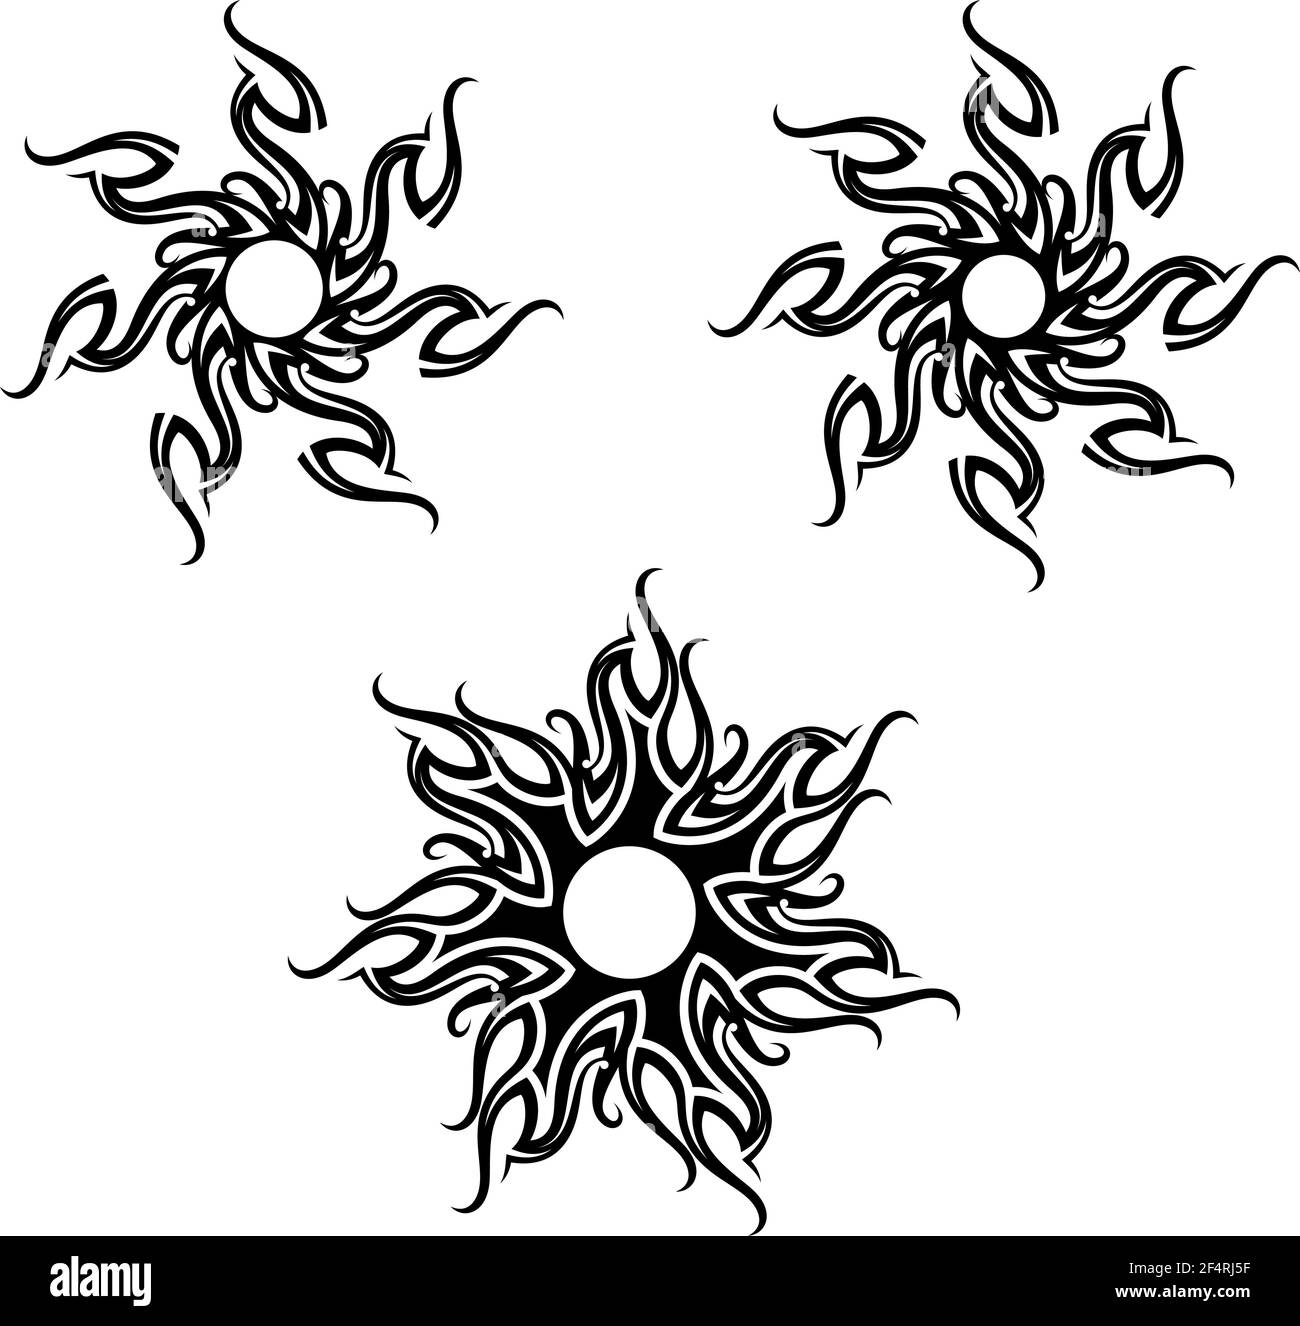 Tribal Tattoo Sun Design Vector Art Illustration Stock Vector Image ...